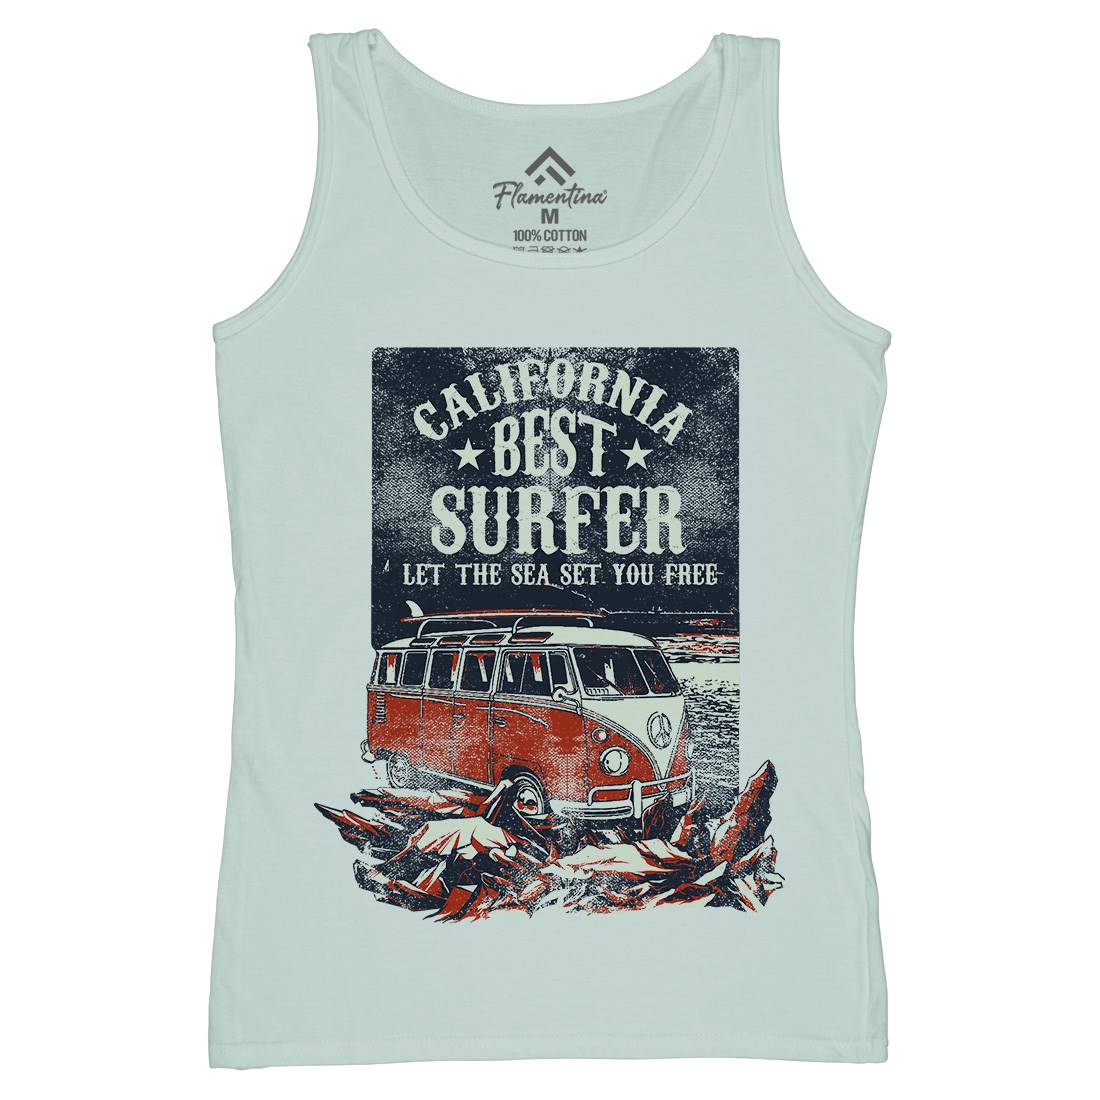 Let The Sea Set You Free Womens Organic Tank Top Vest Surf C956